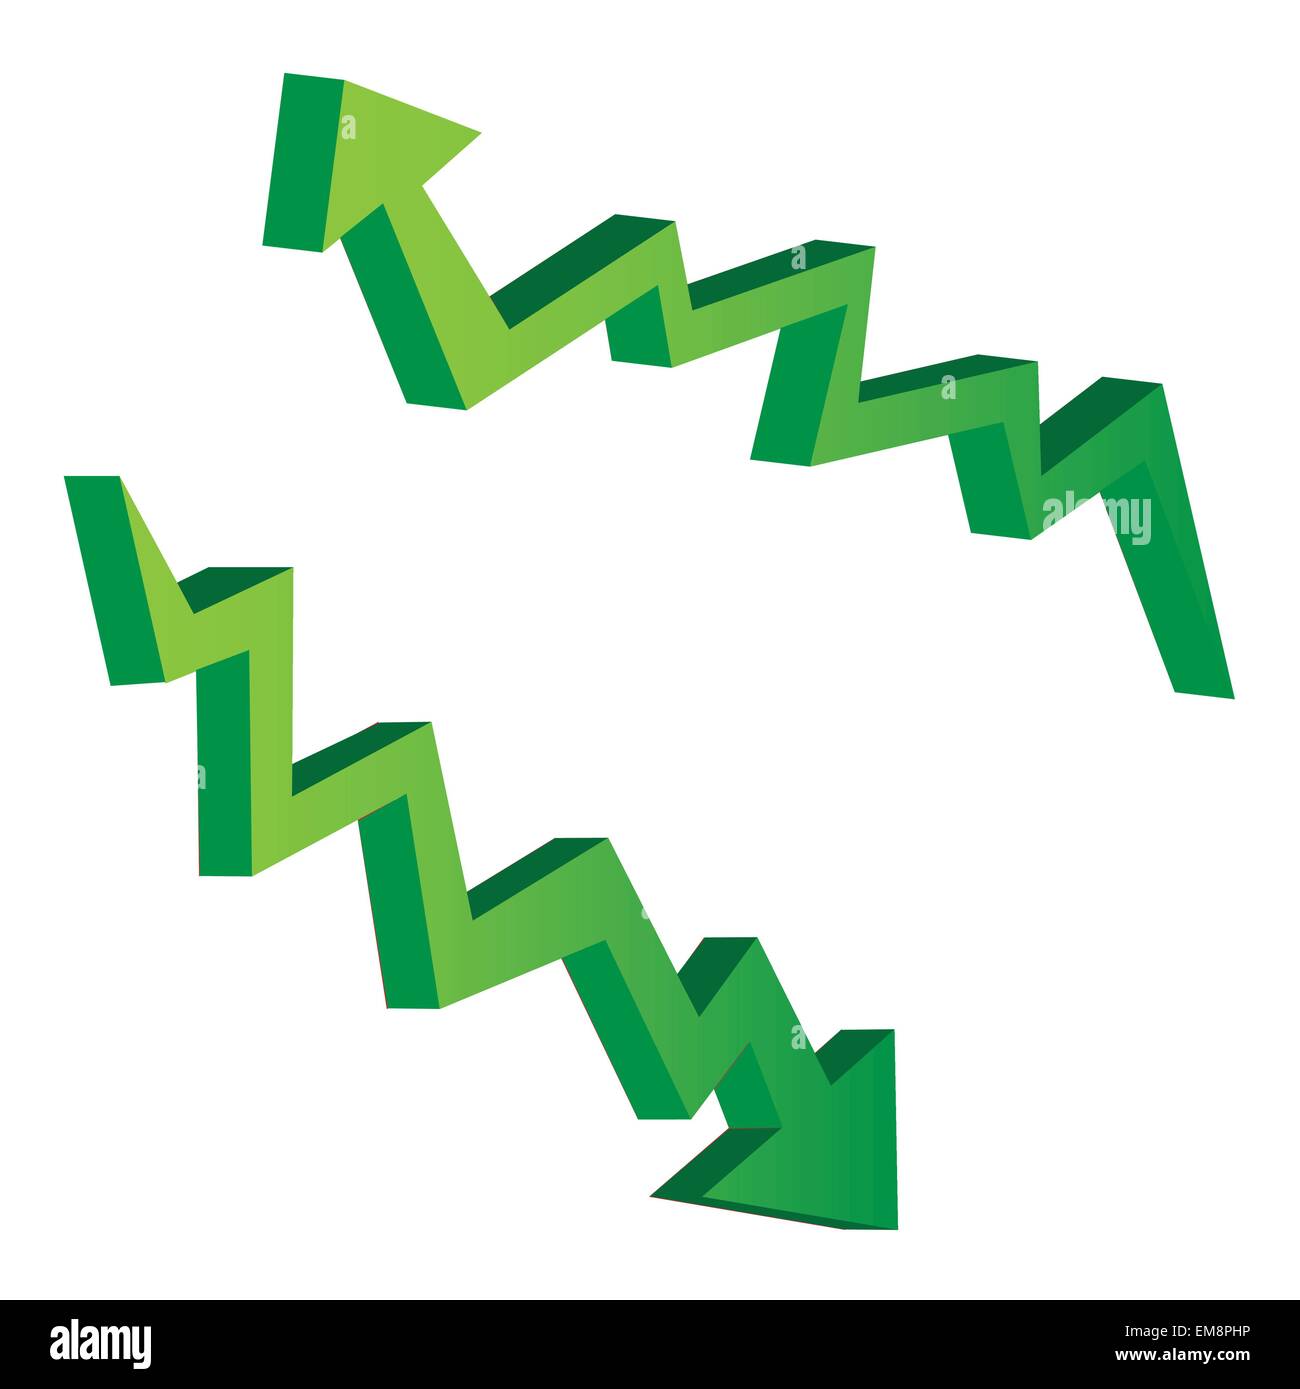 green arrow illustrations for economic concept Stock Vector